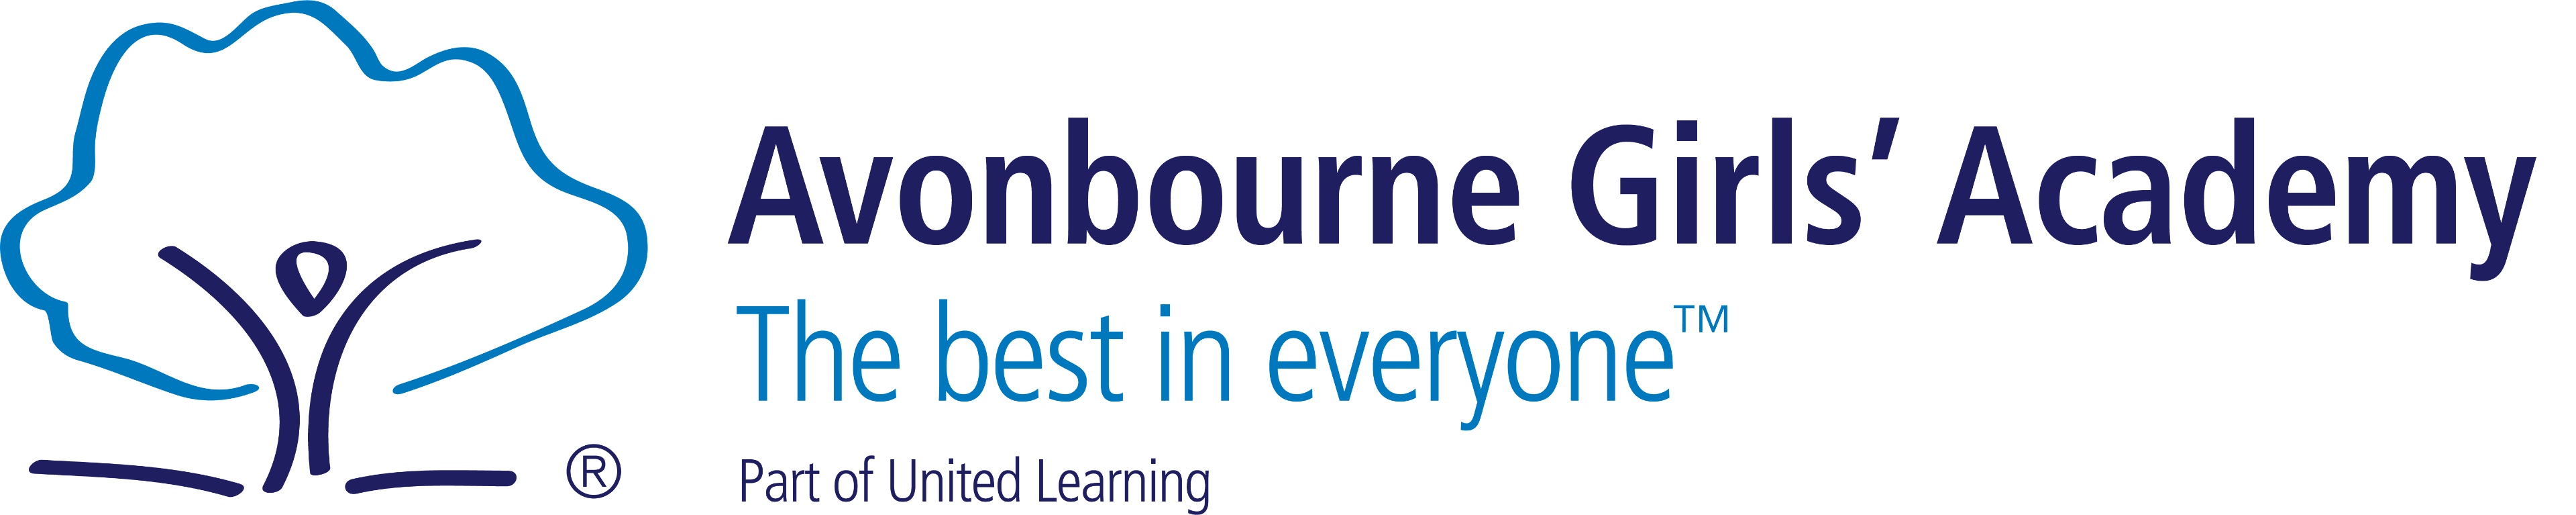 Avonbourne Girls Academy logo